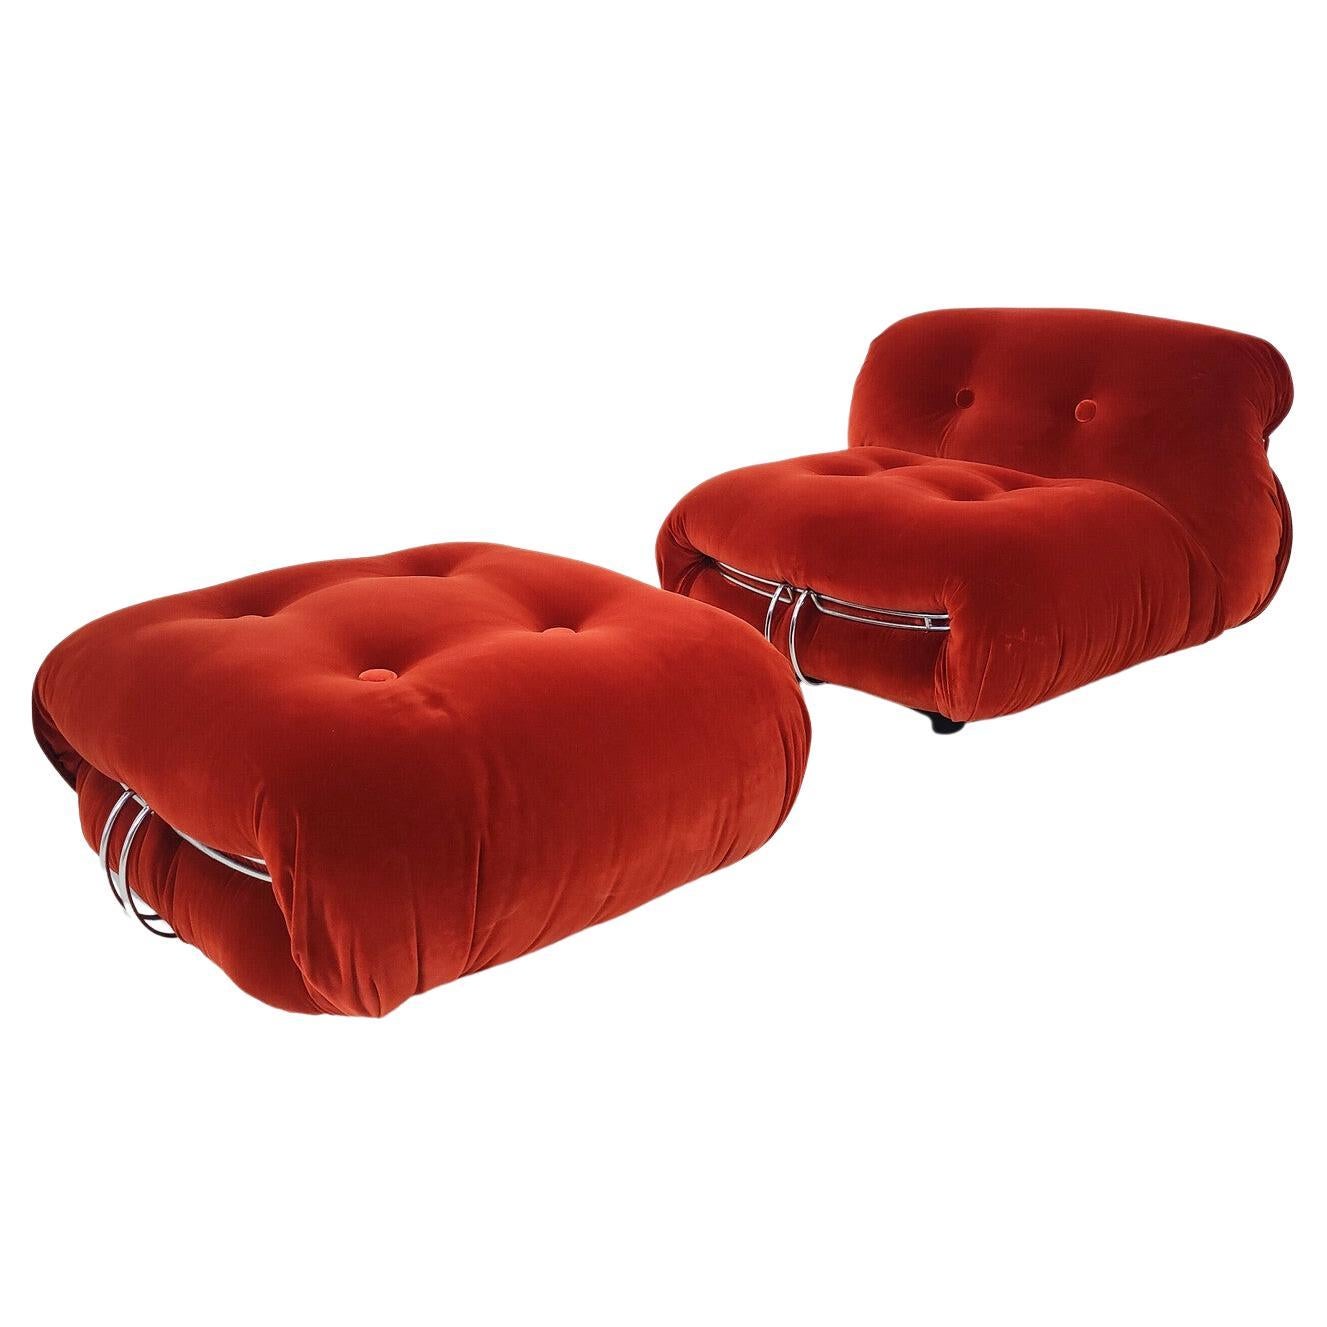 Pair of Midcentury Orange "Soriana" Lounge Chair and Ottoman